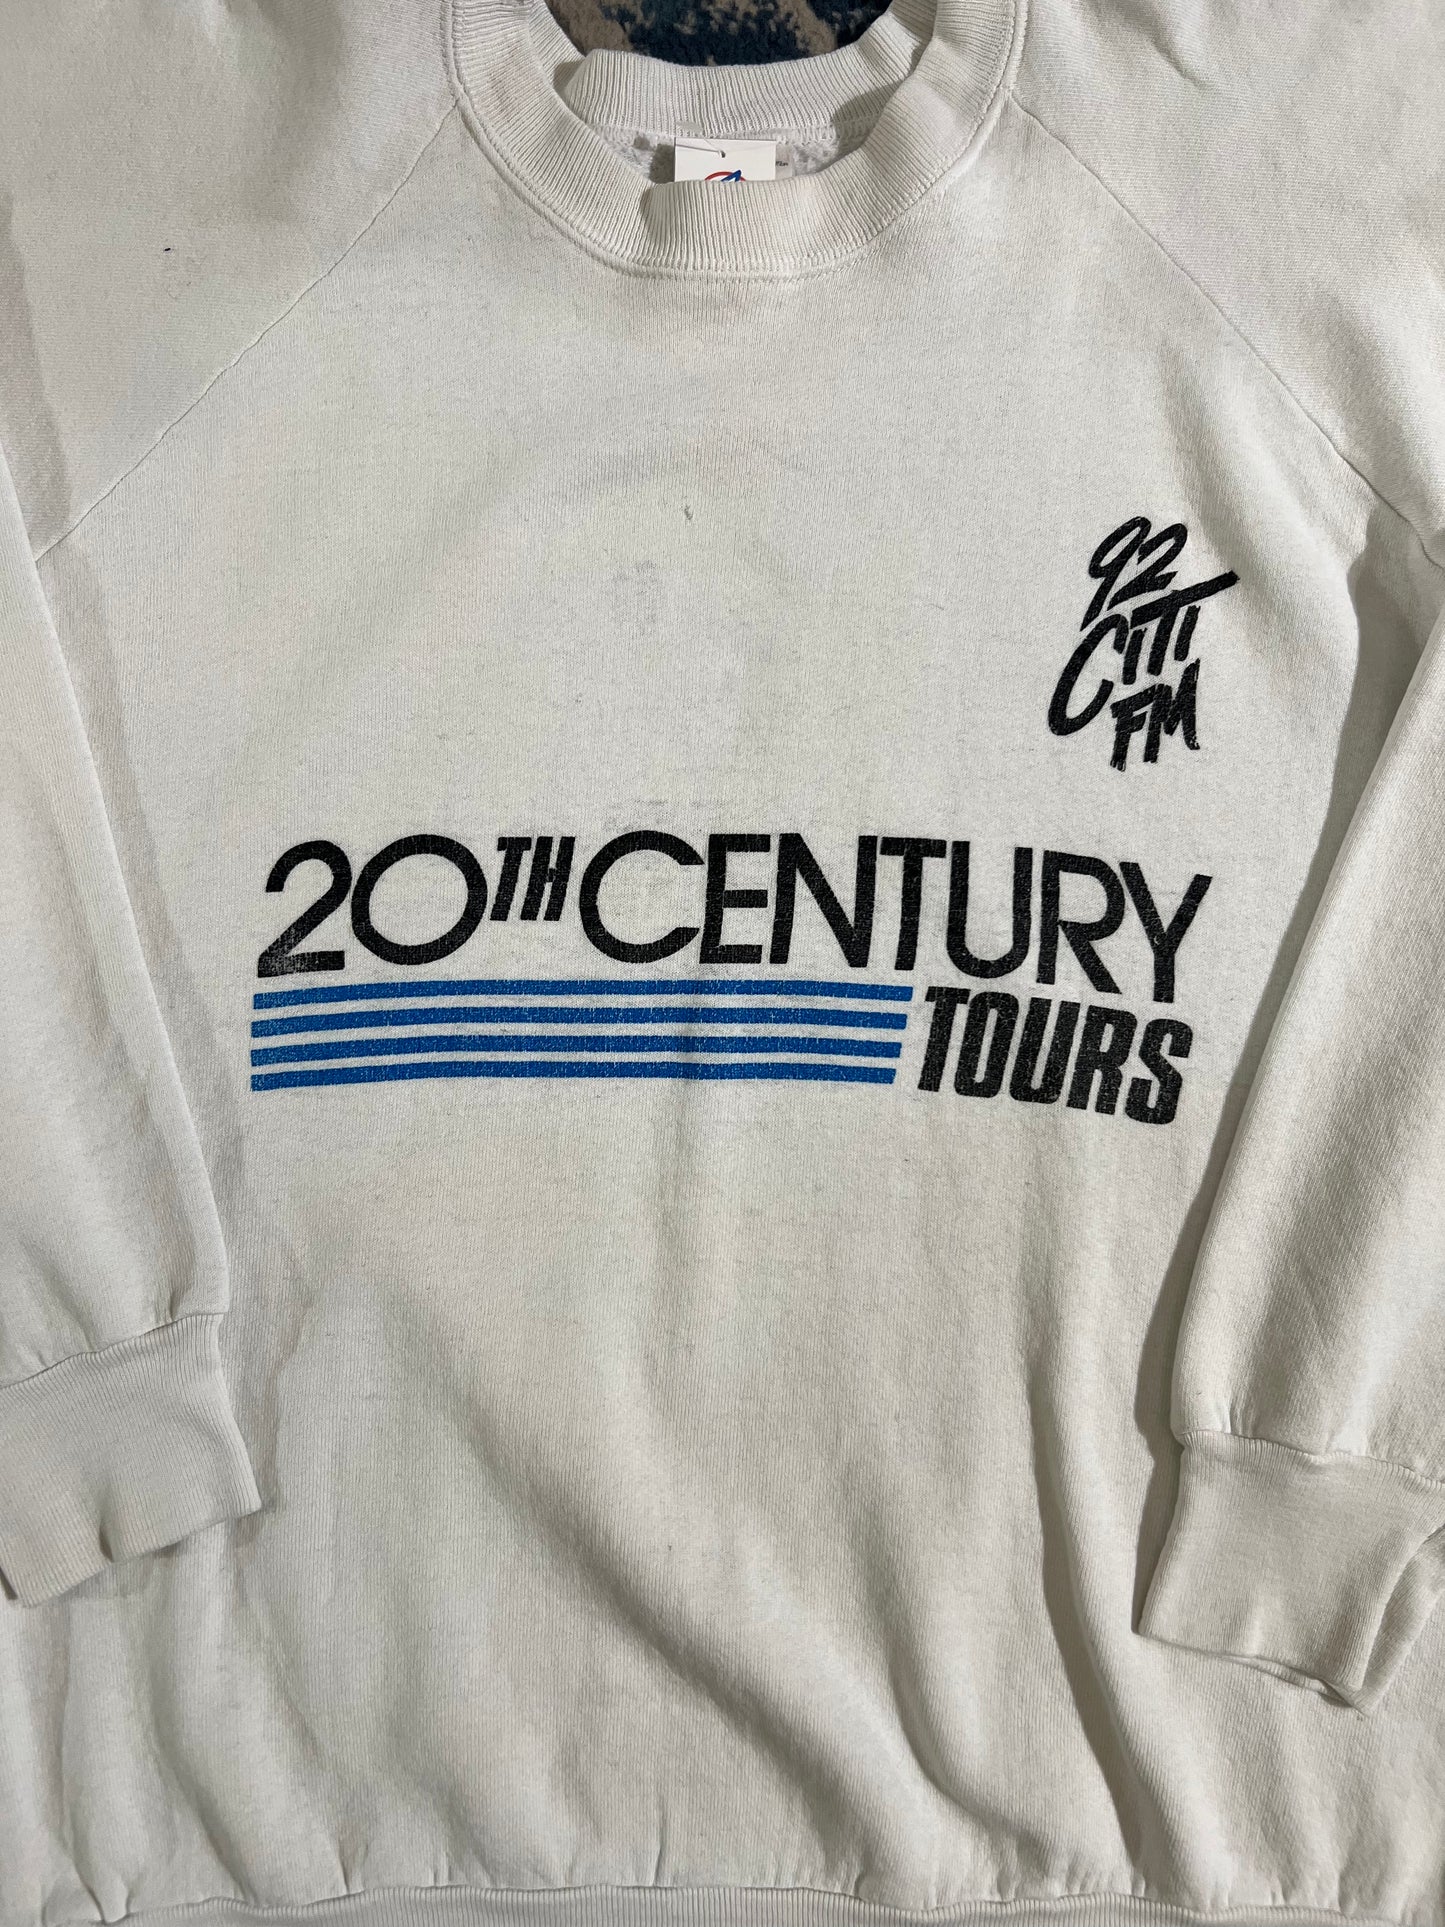 Rolling Stones Tour "20th Century Tours" Crewneck